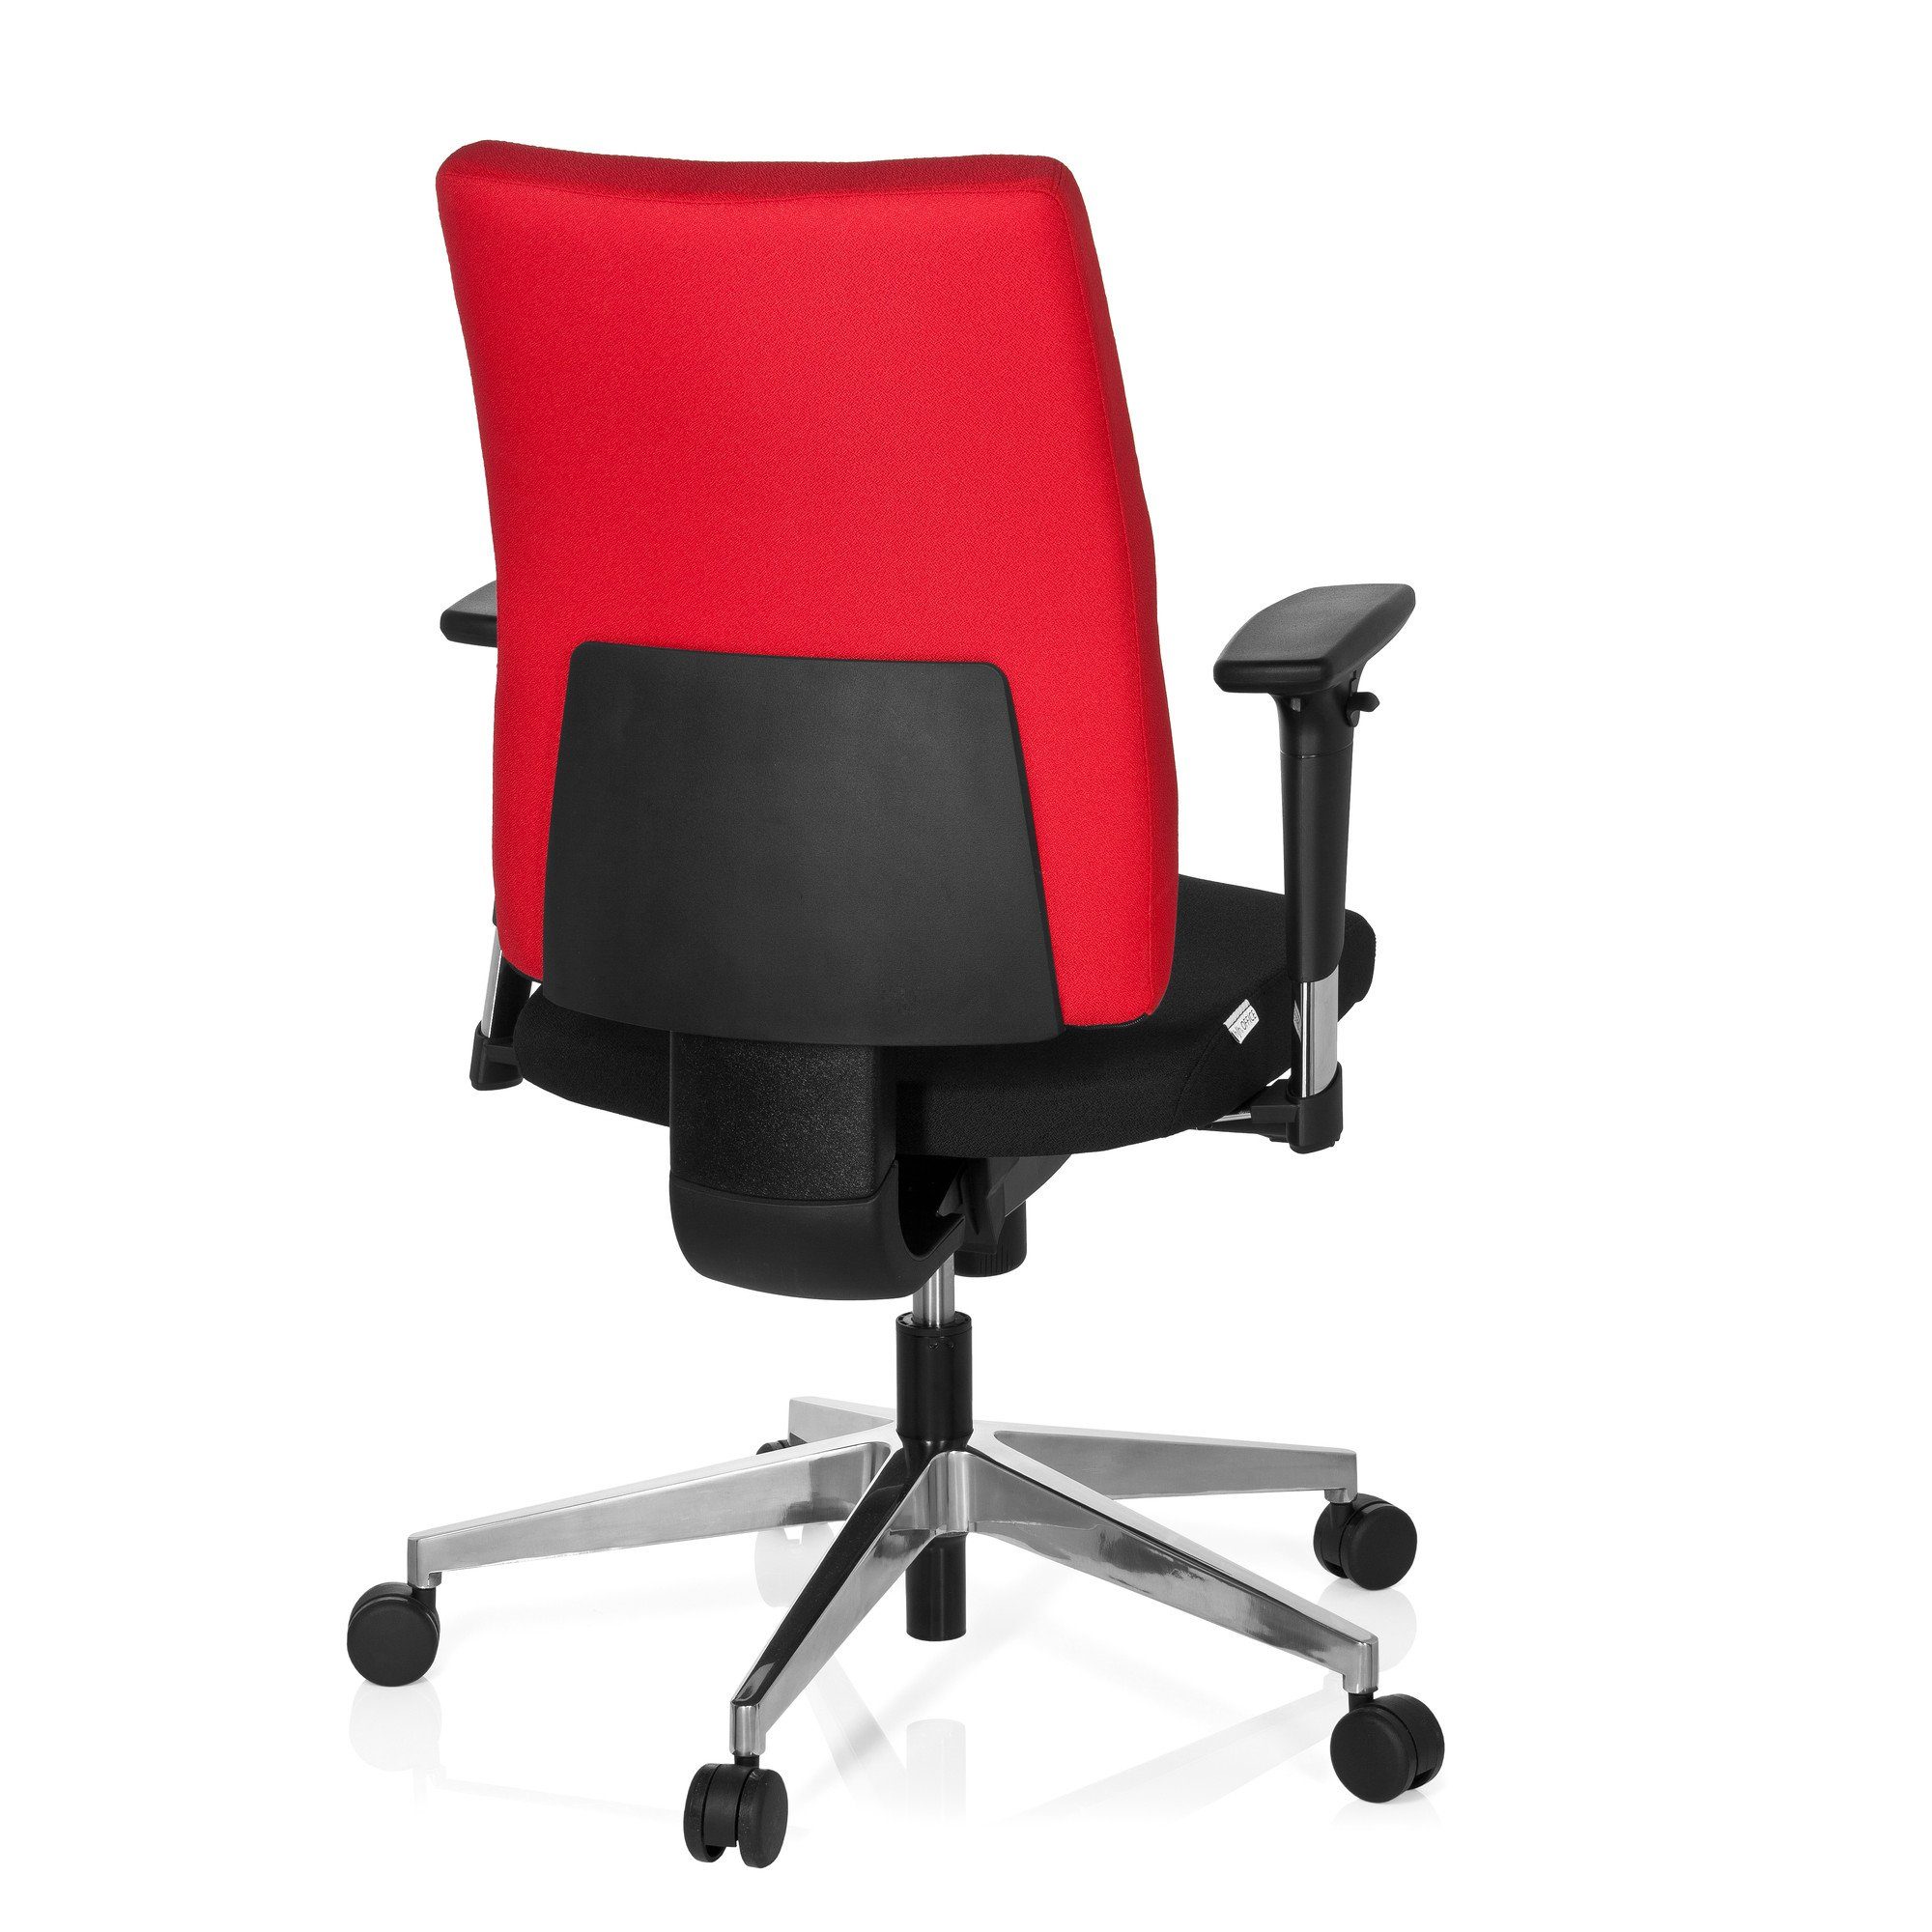 350 (1 Drehstuhl PRO-TEC Profi St), OFFICE ergonomisch hjh Schwarz/Rot Stoff Schreibtischstuhl Bürostuhl